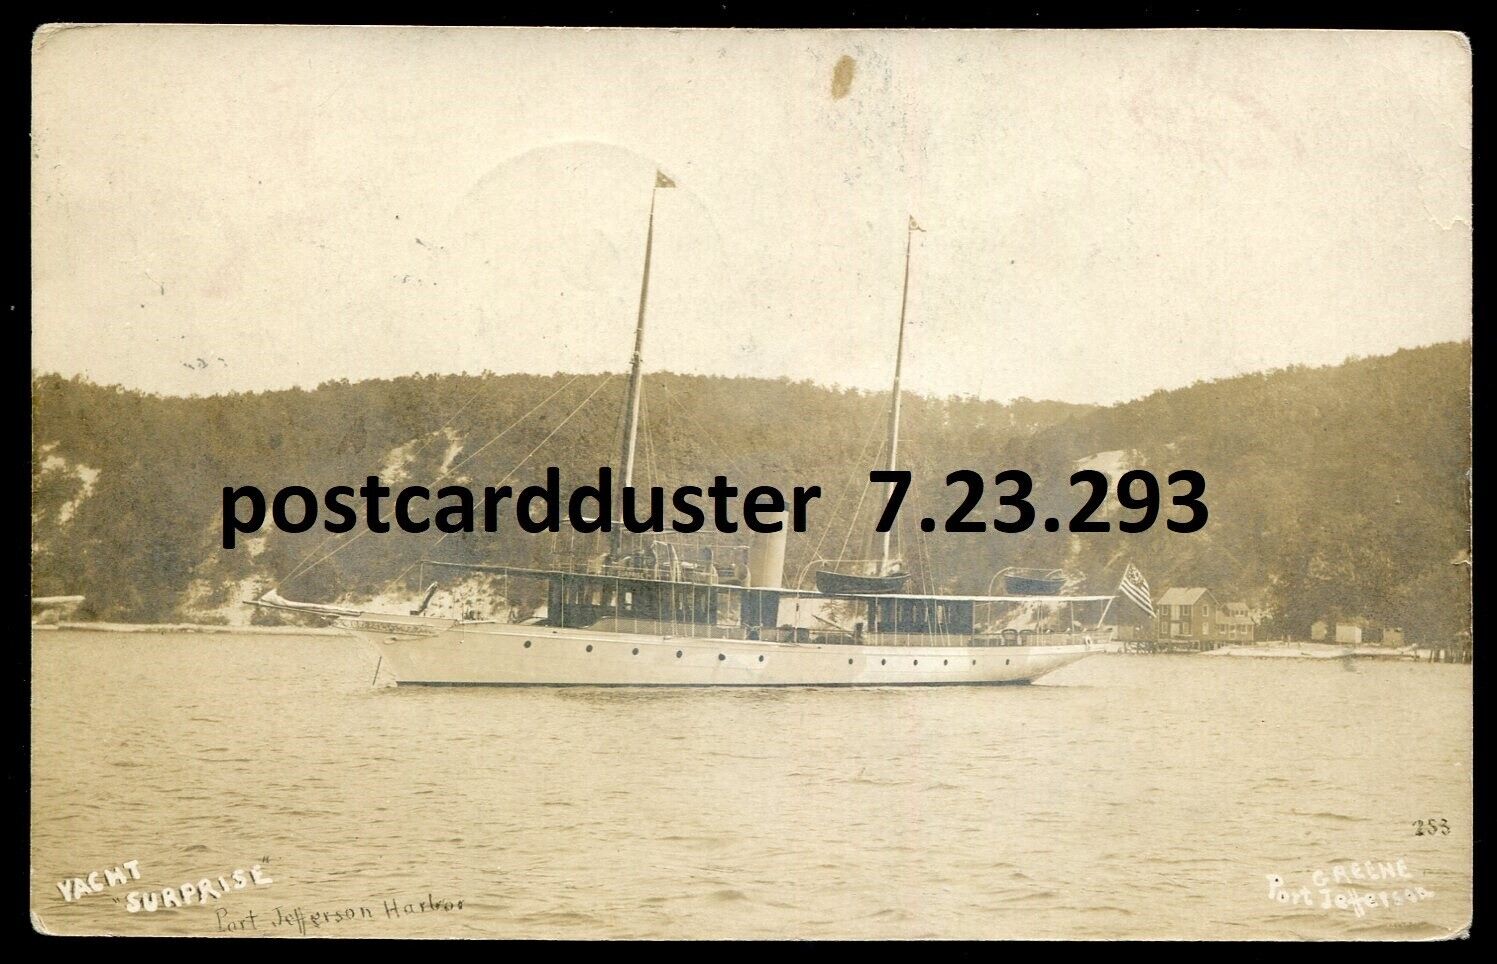 PORT JEFFERSON New York 1908 Yacht SURPRISE Harbor Real Photo Postcard by Greene